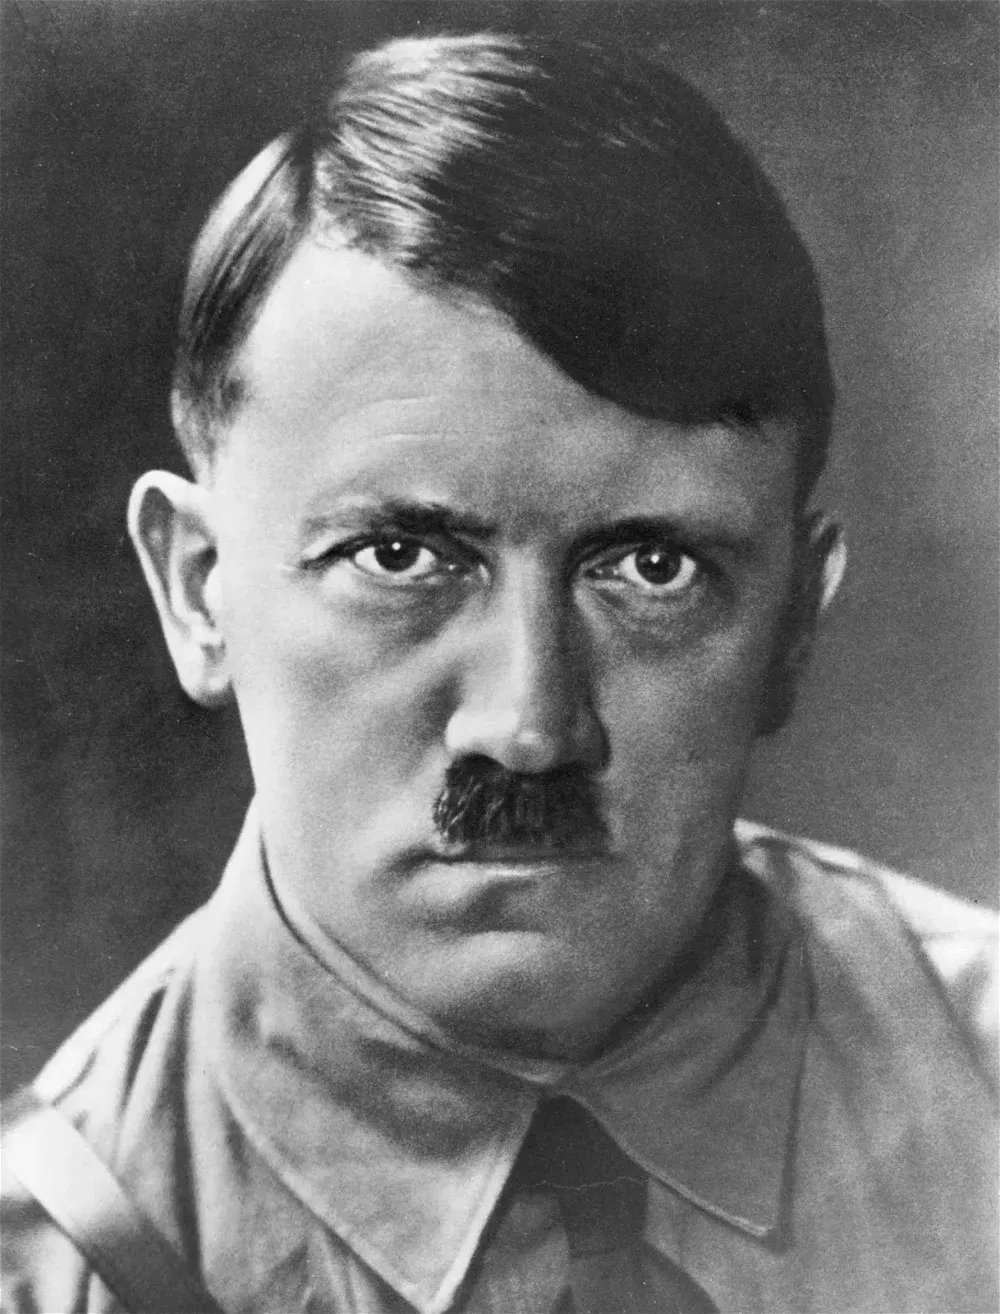 Avatar of Adolf Hitler 卐